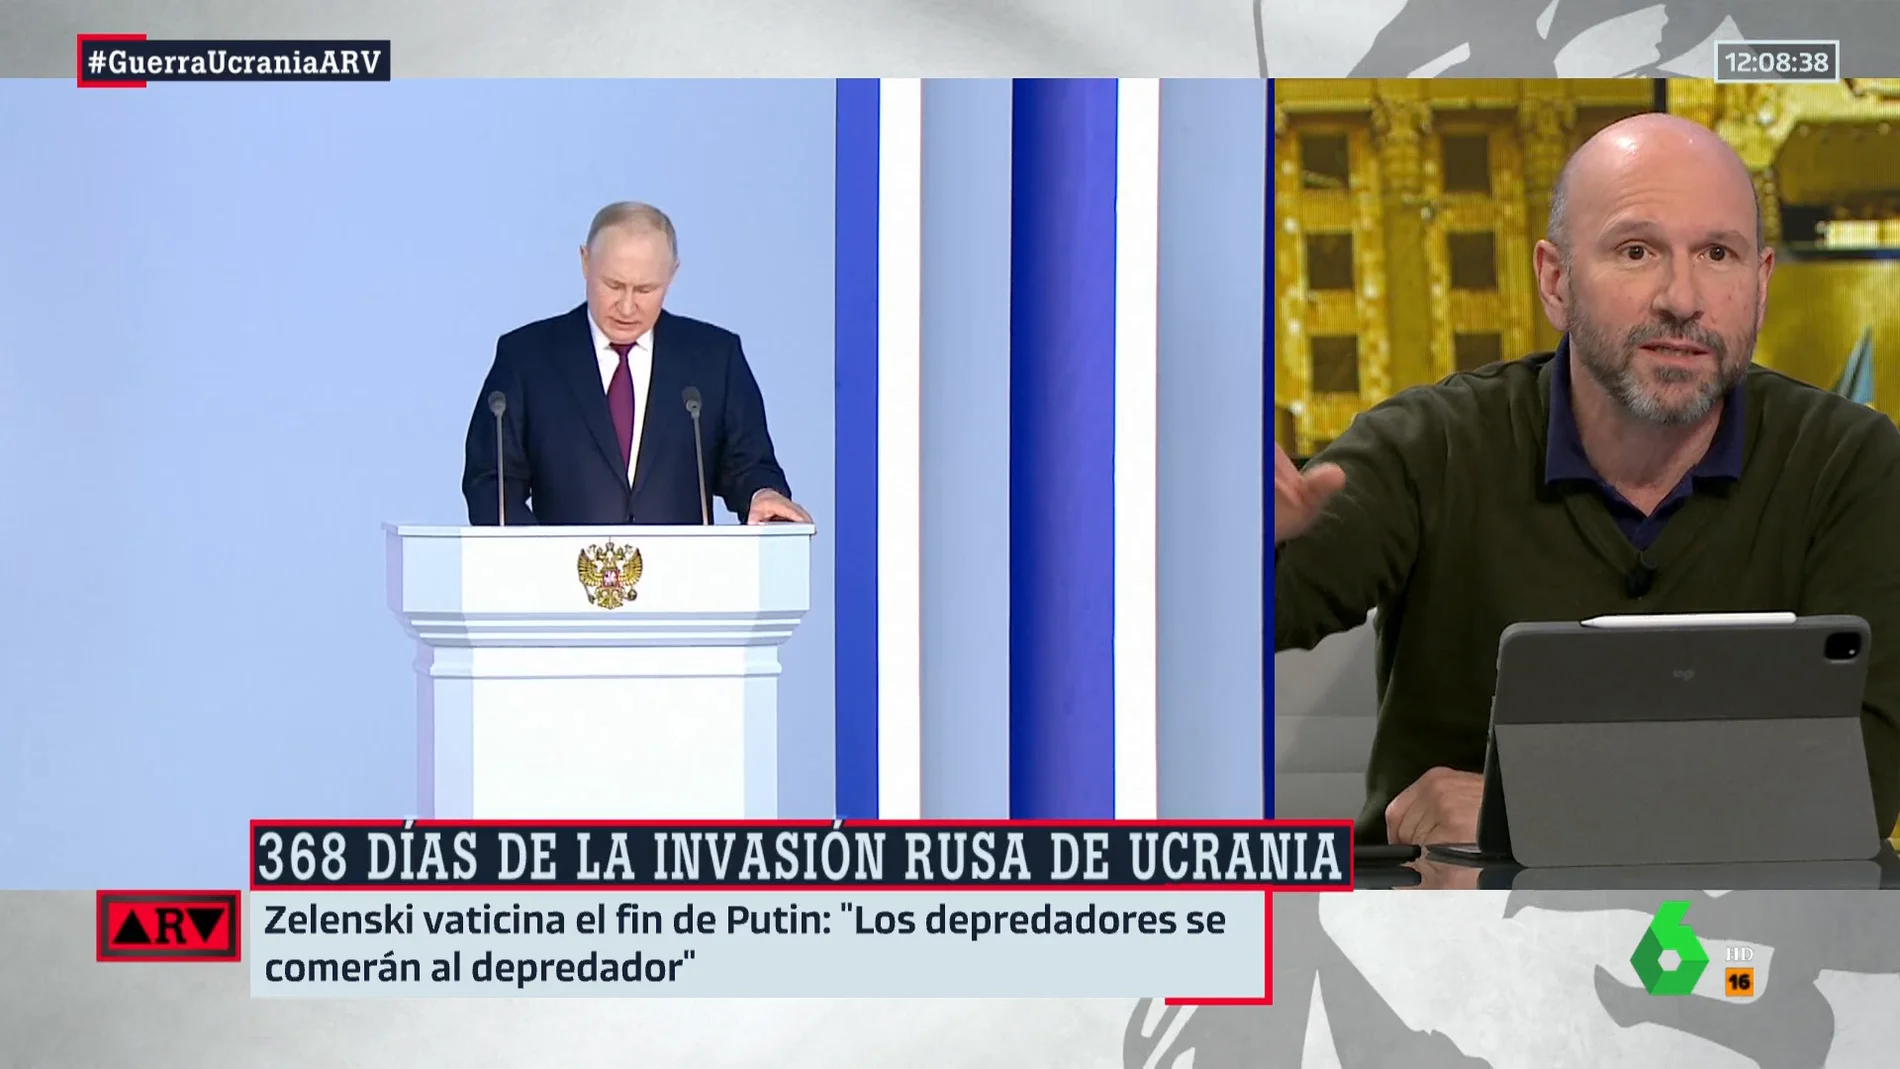  ÓScar Vara, sobre Putin: "Les está mandando a un plan enloquecido. Ya veremos si esos rusos no acaban devorándolo"